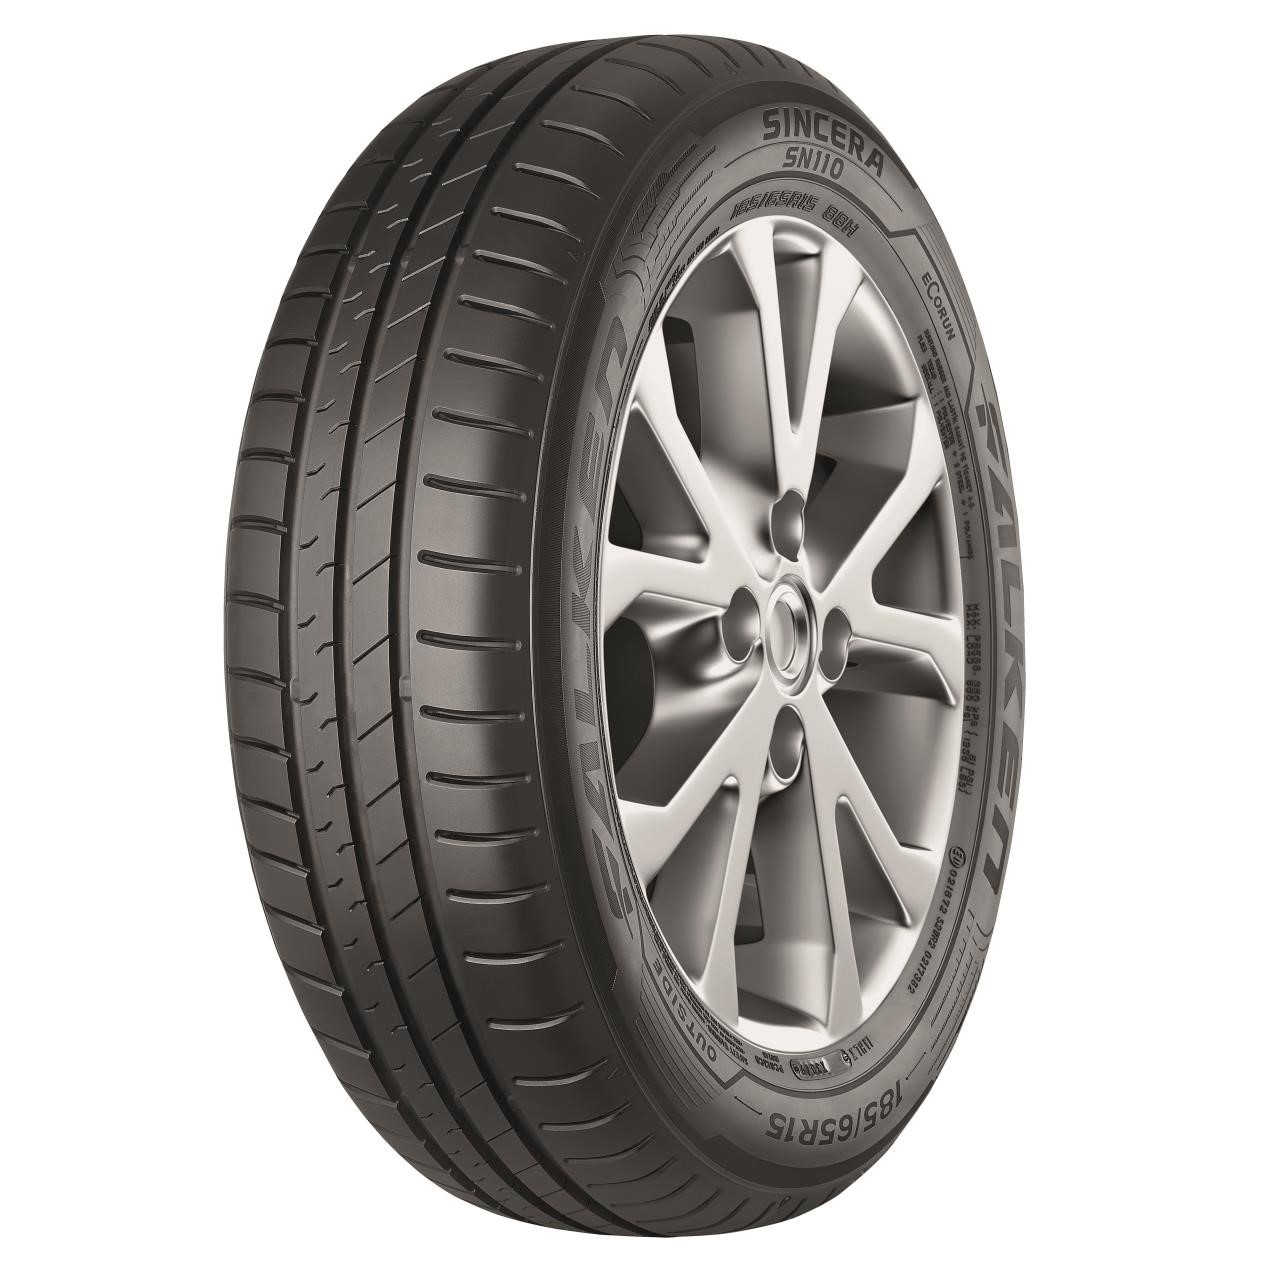 Falken Sincera SN110 Ecorun Tire and Tests - Reviews